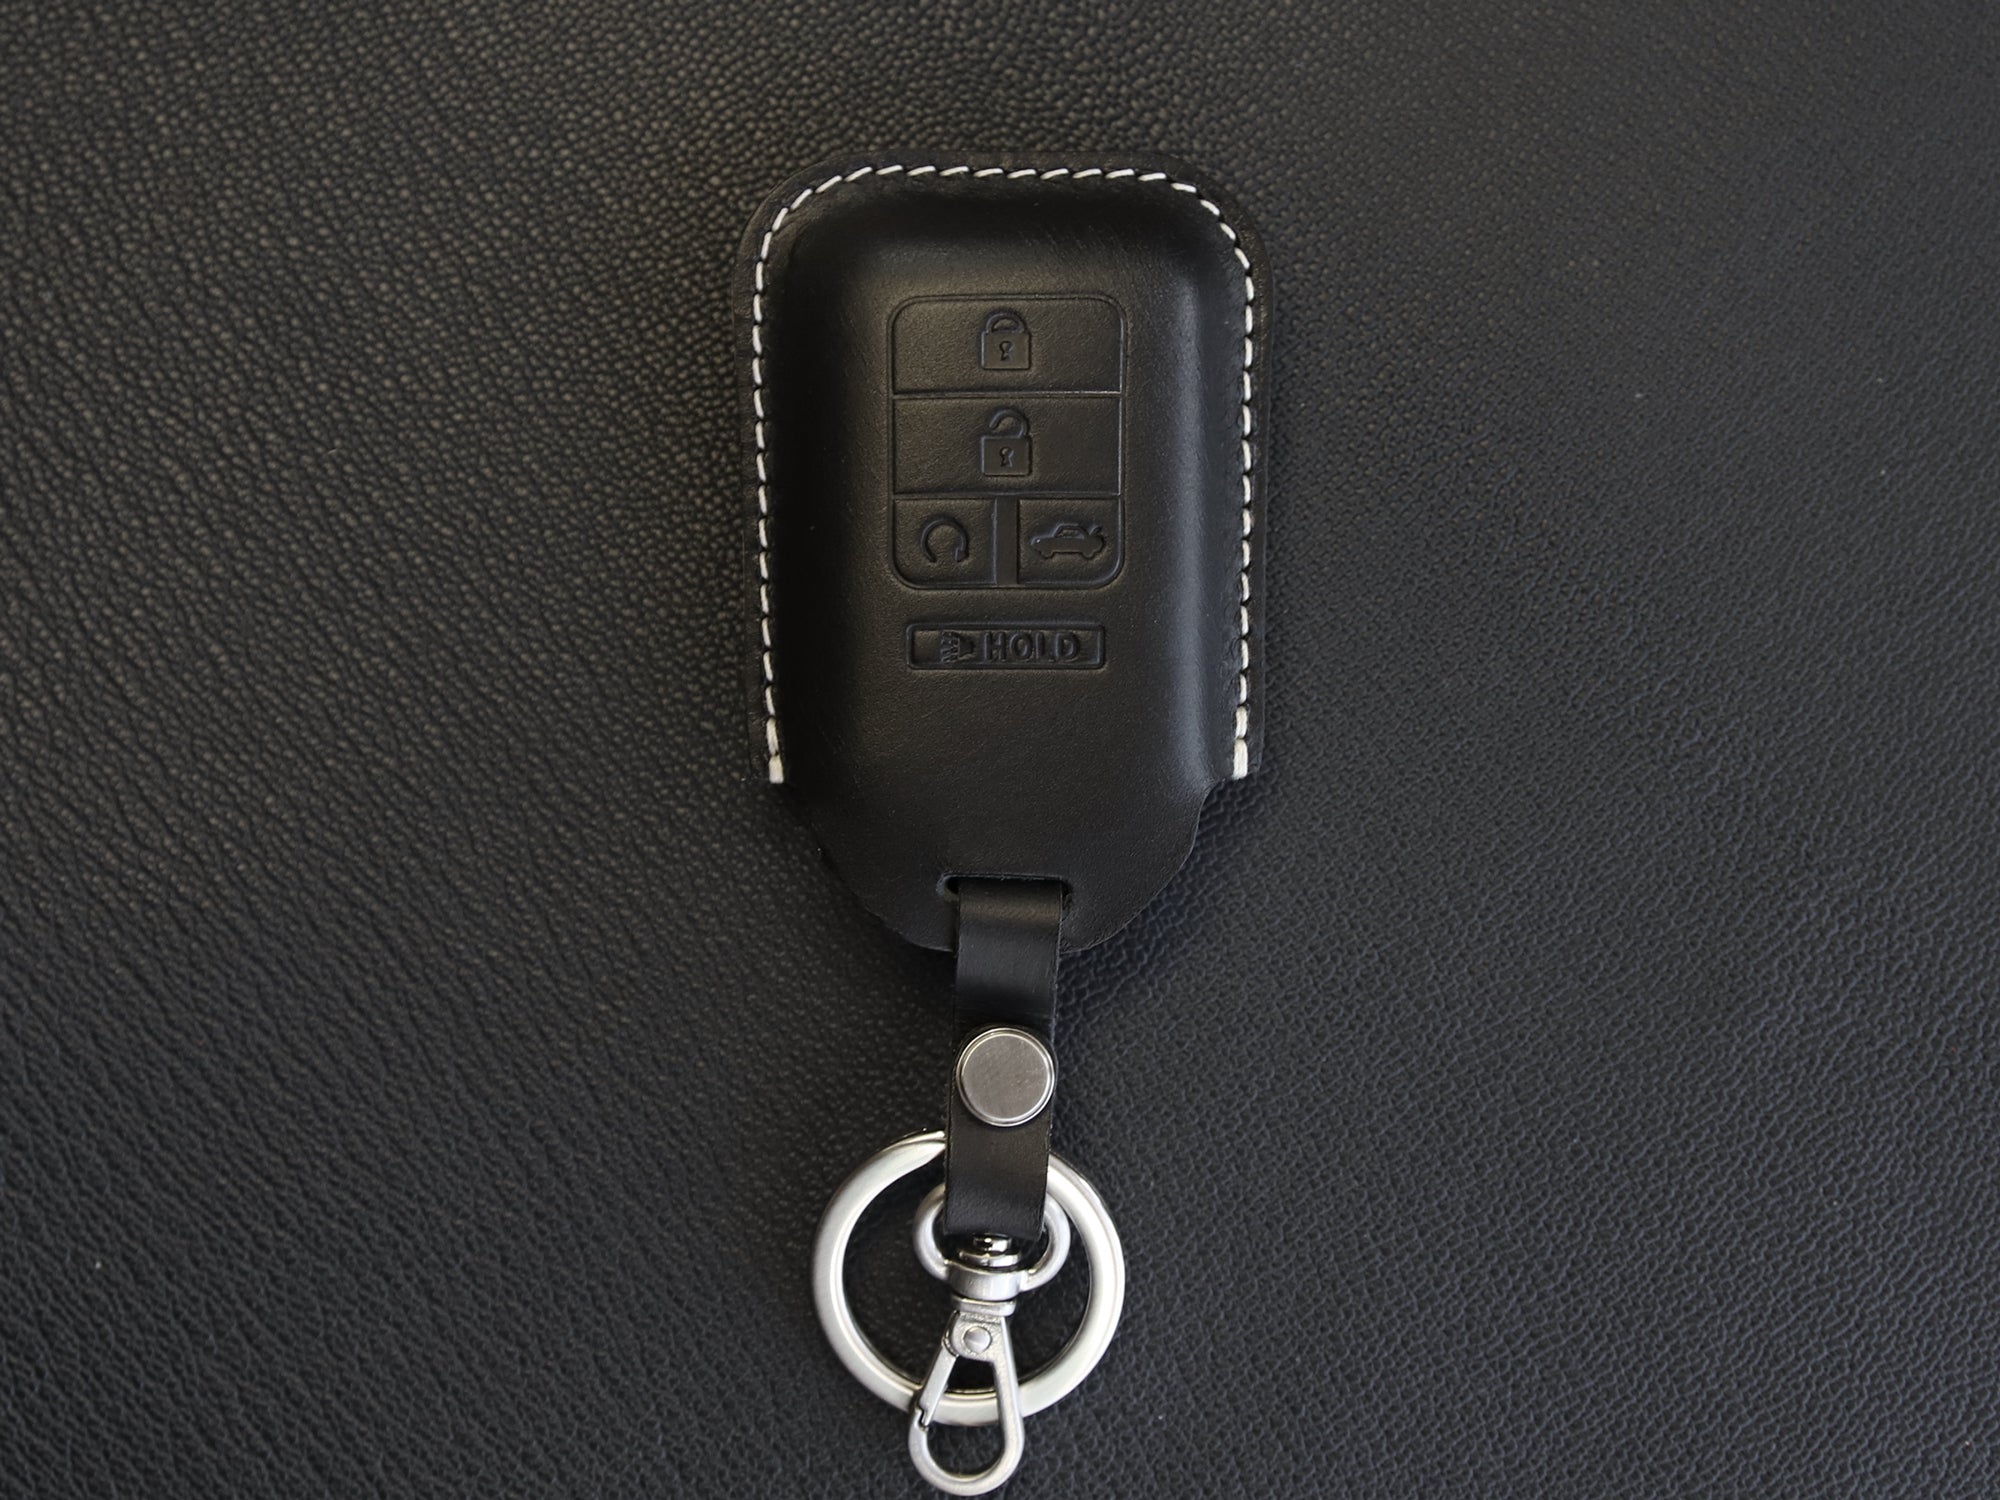 Honda Key Fob Leather Case Fits Accord Ridgeline Accord Civic